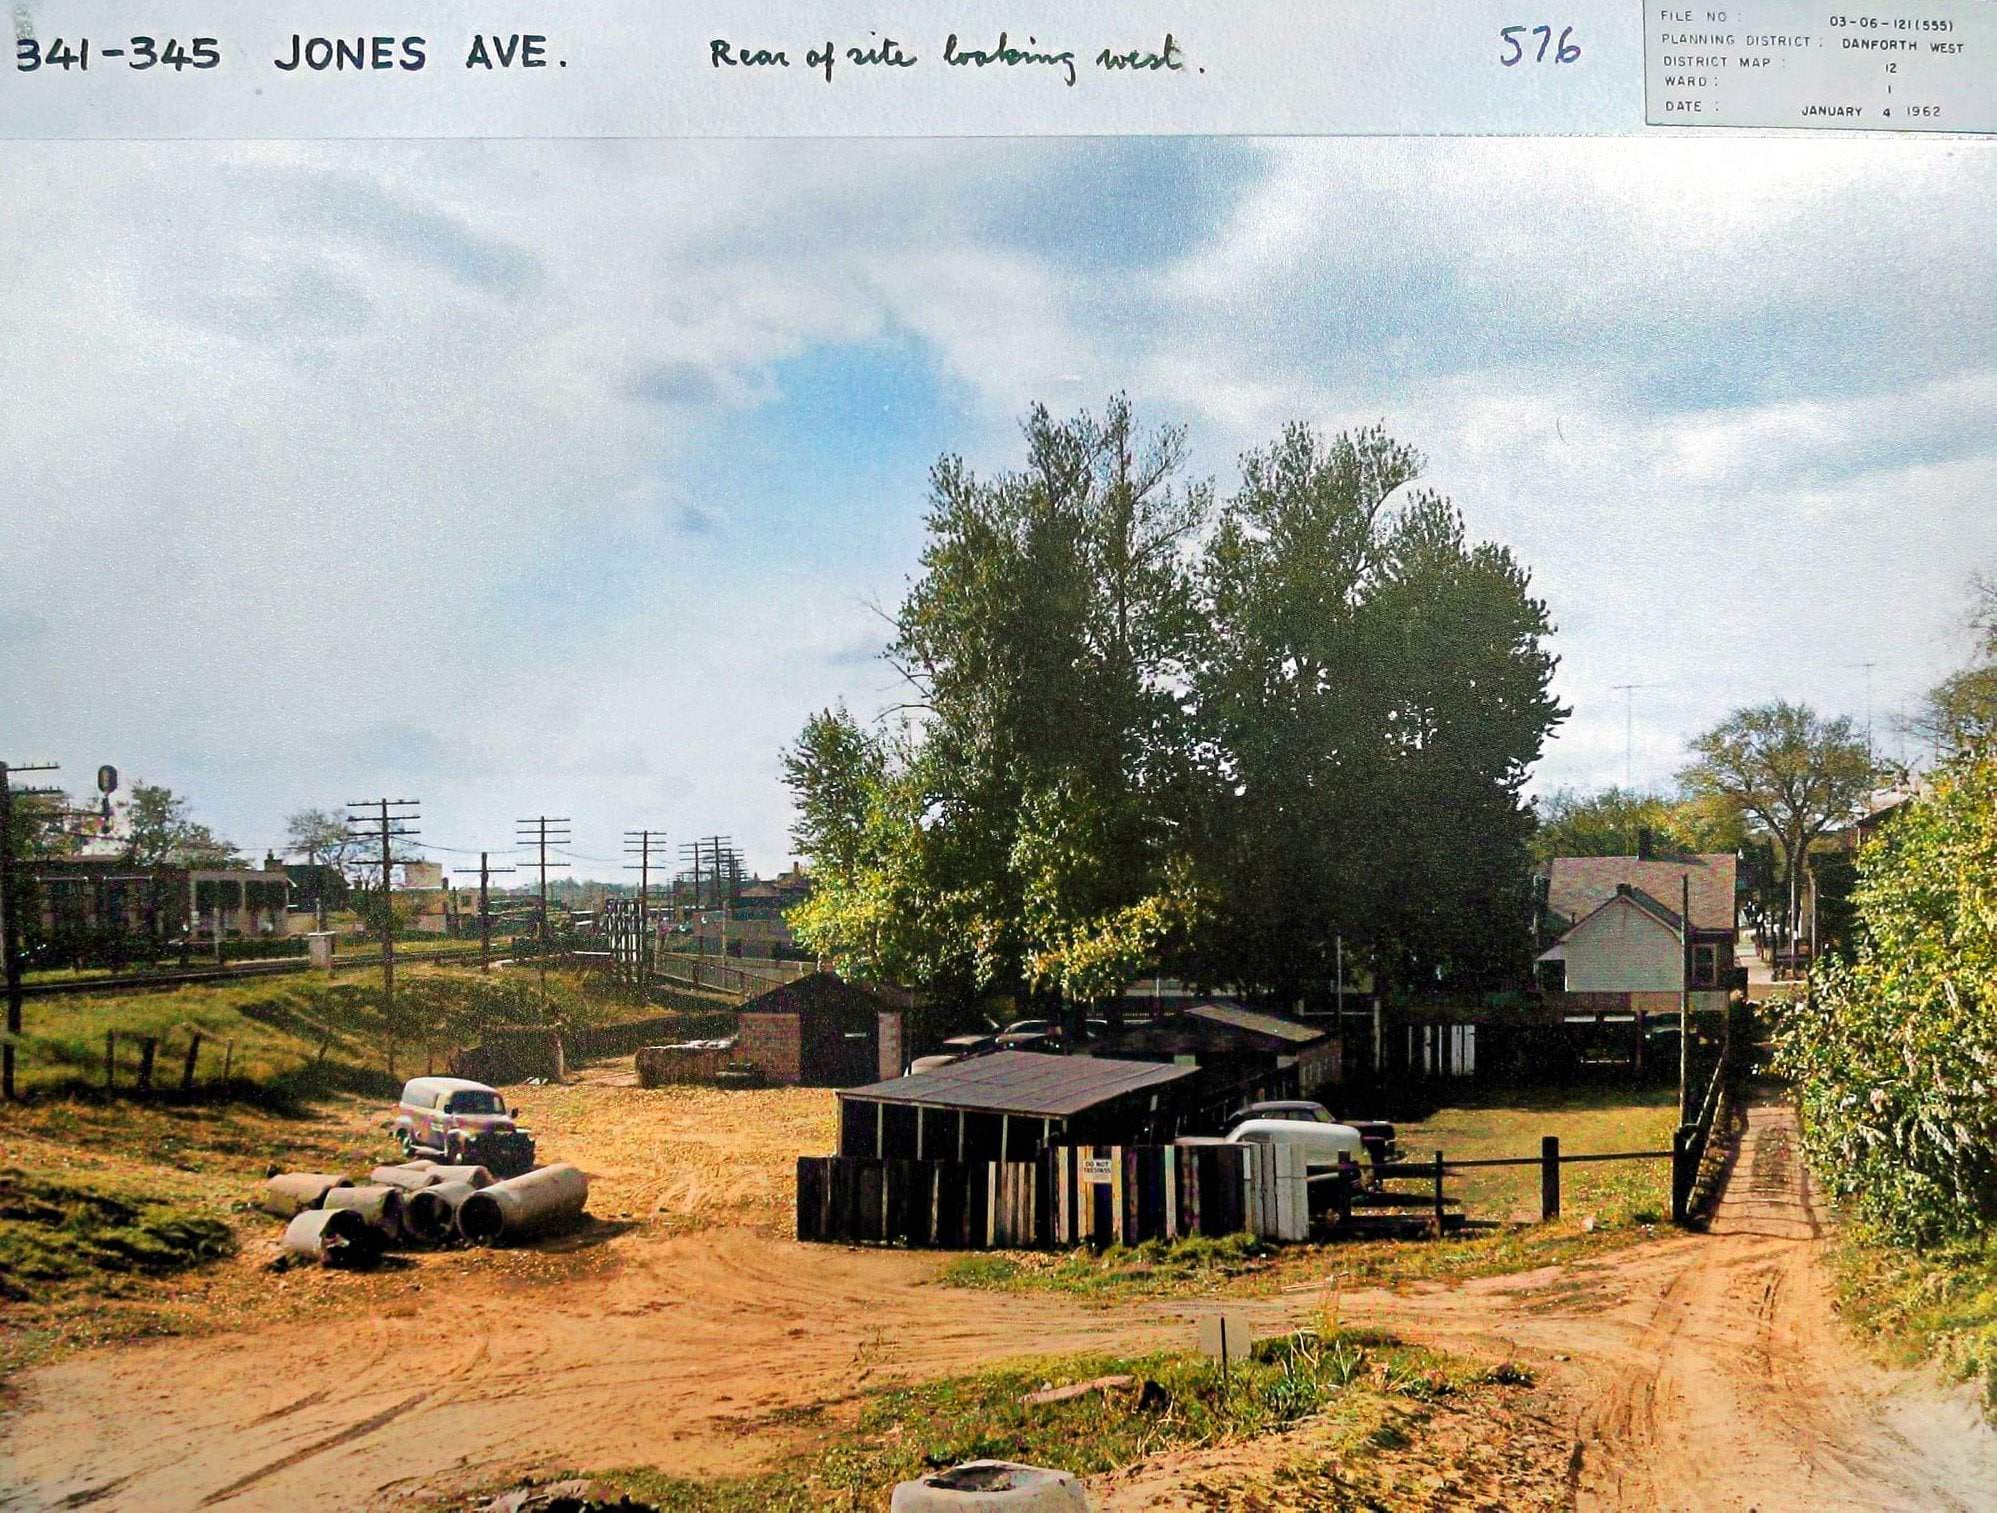 Jones Avenue, 1960s